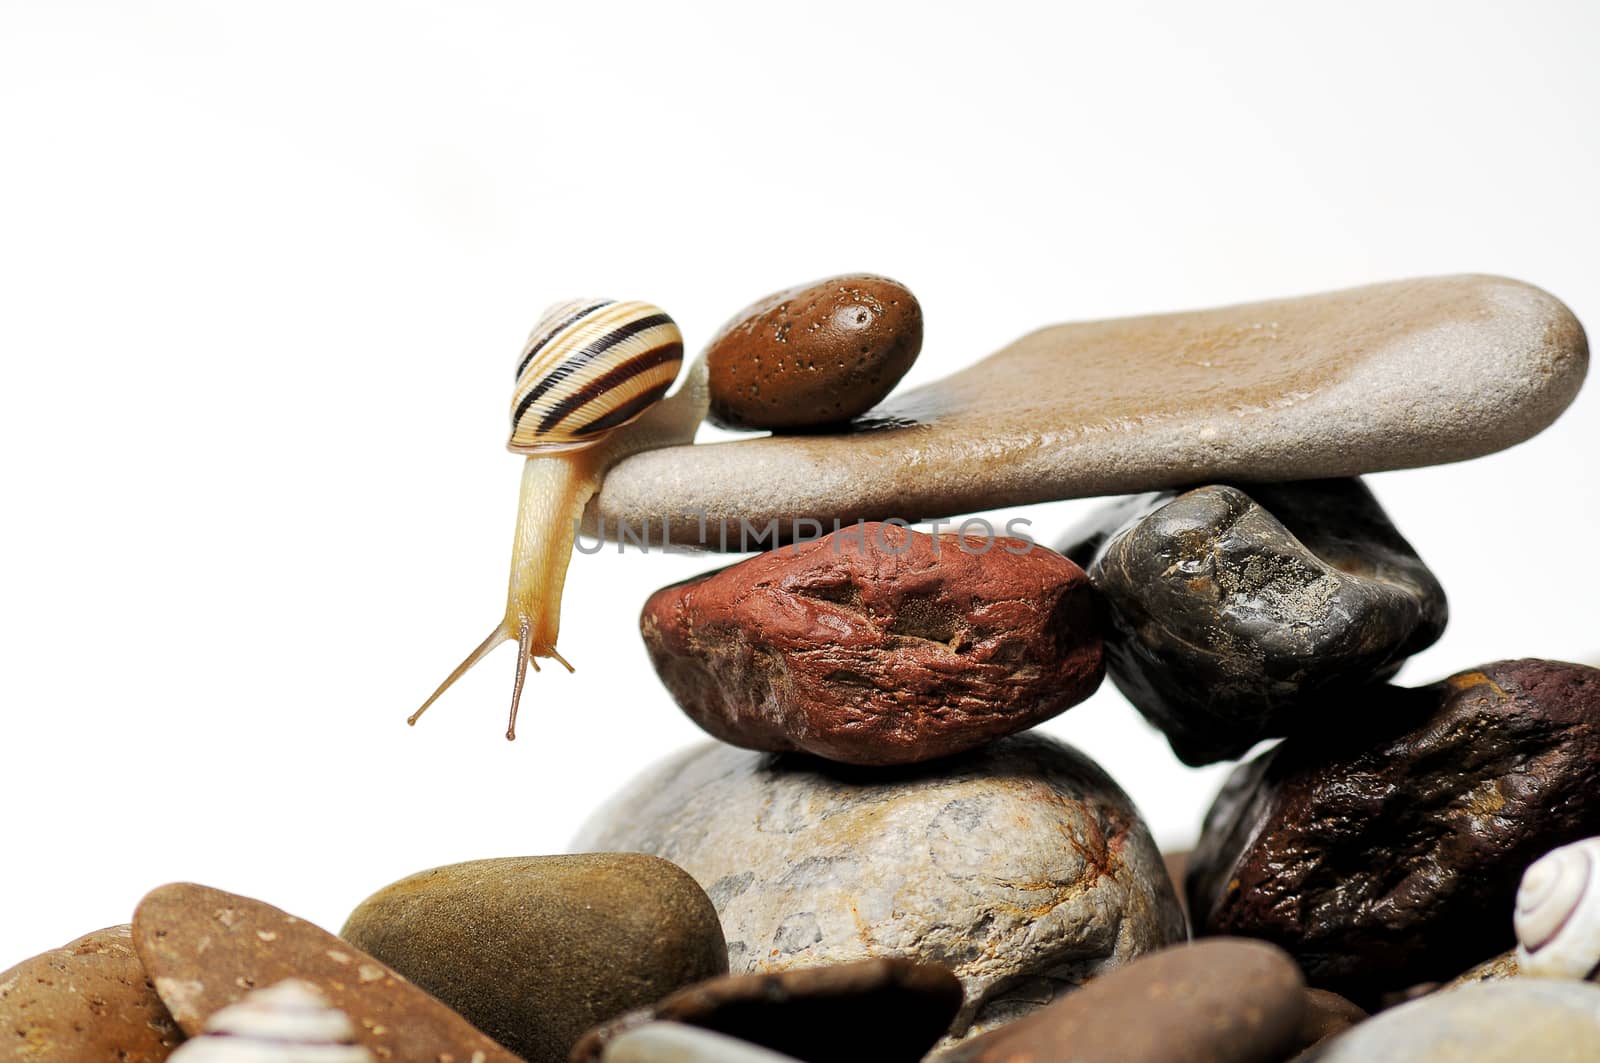 snail  on rocks by ivosar